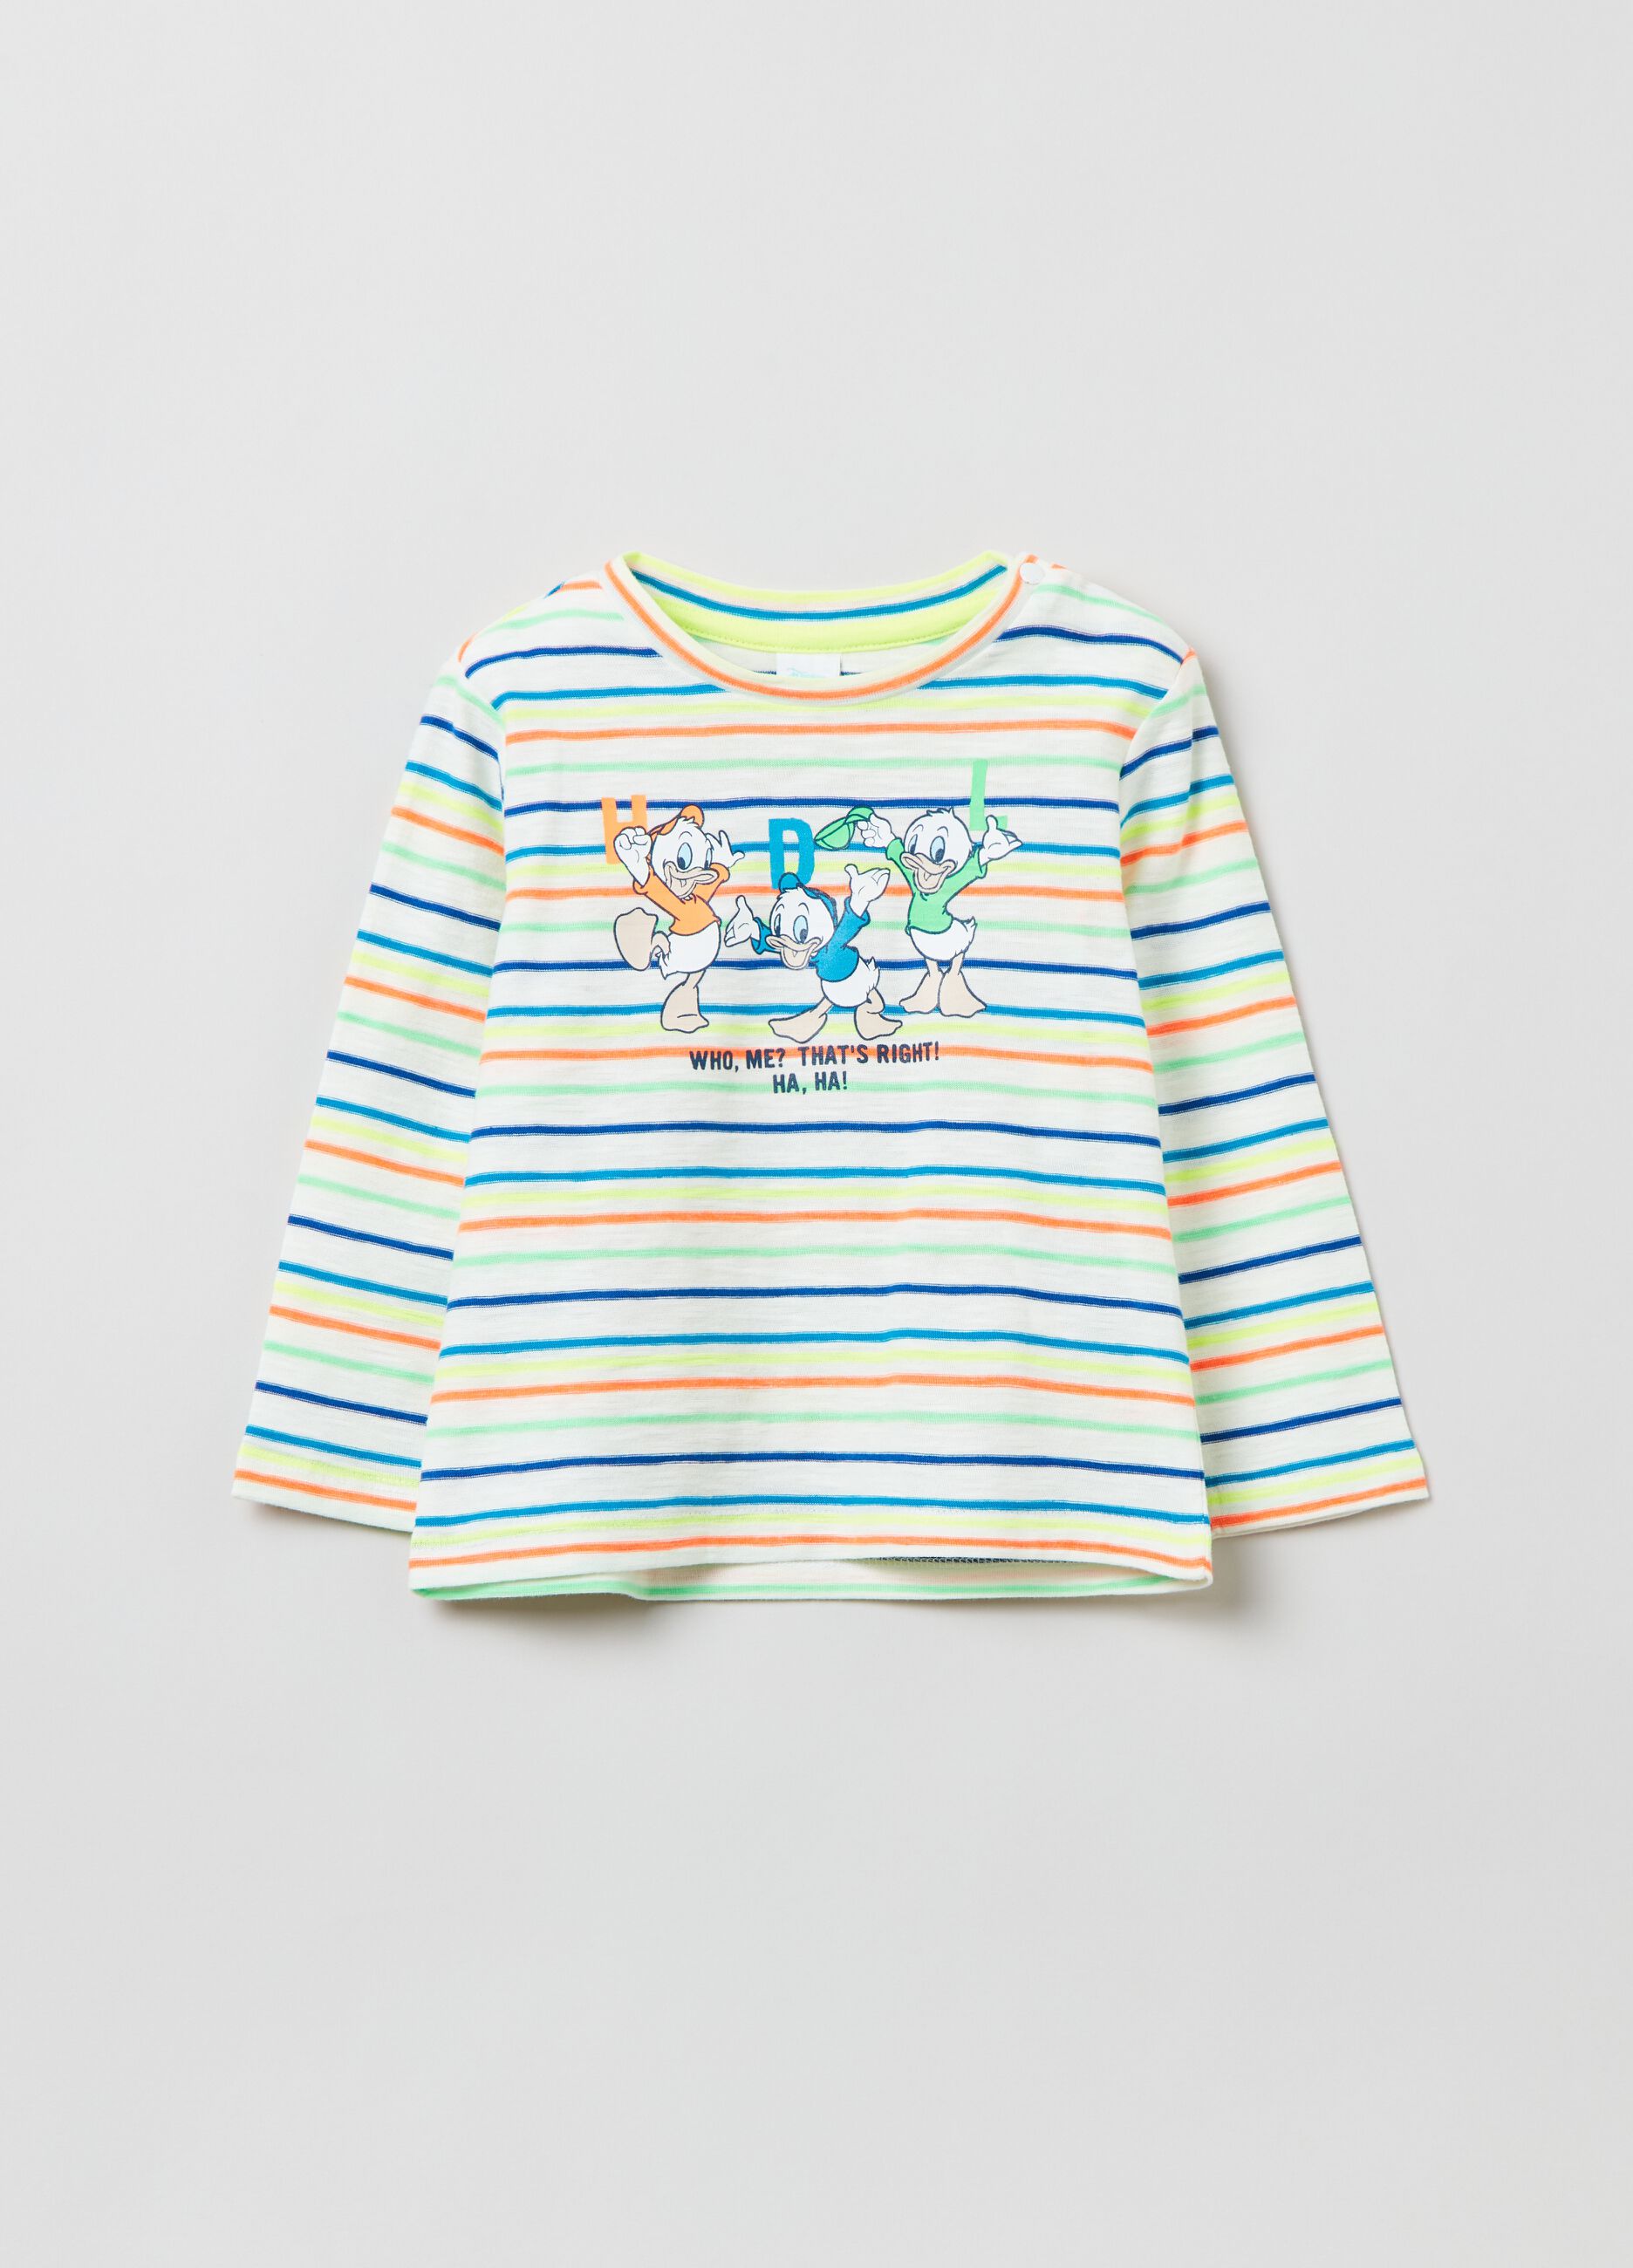 Striped T-shirt with Disney Baby Huey, Dewey, and Louie print